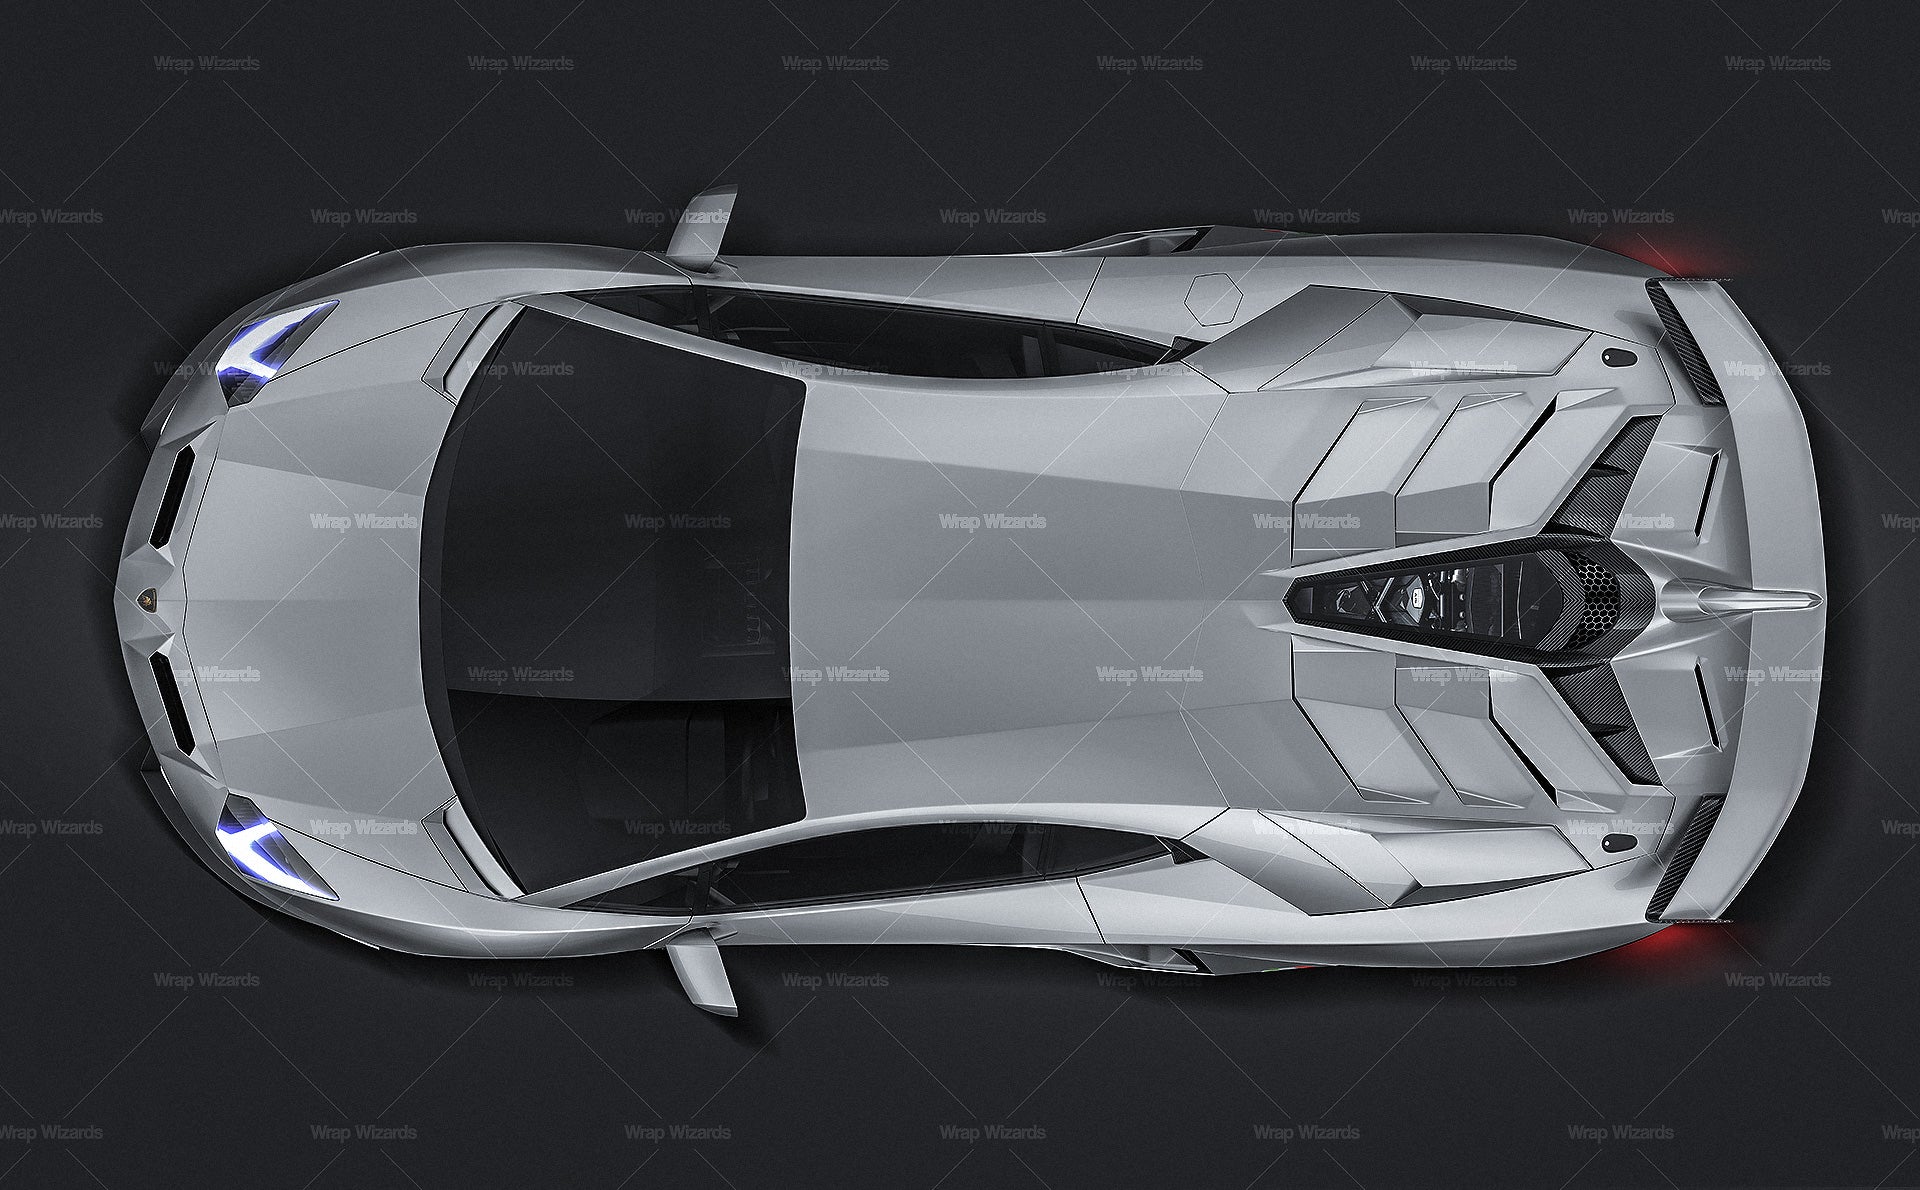 Lamborghini Aventador SVJ 2019 glossy finish - all sides Car Mockup Template.psd